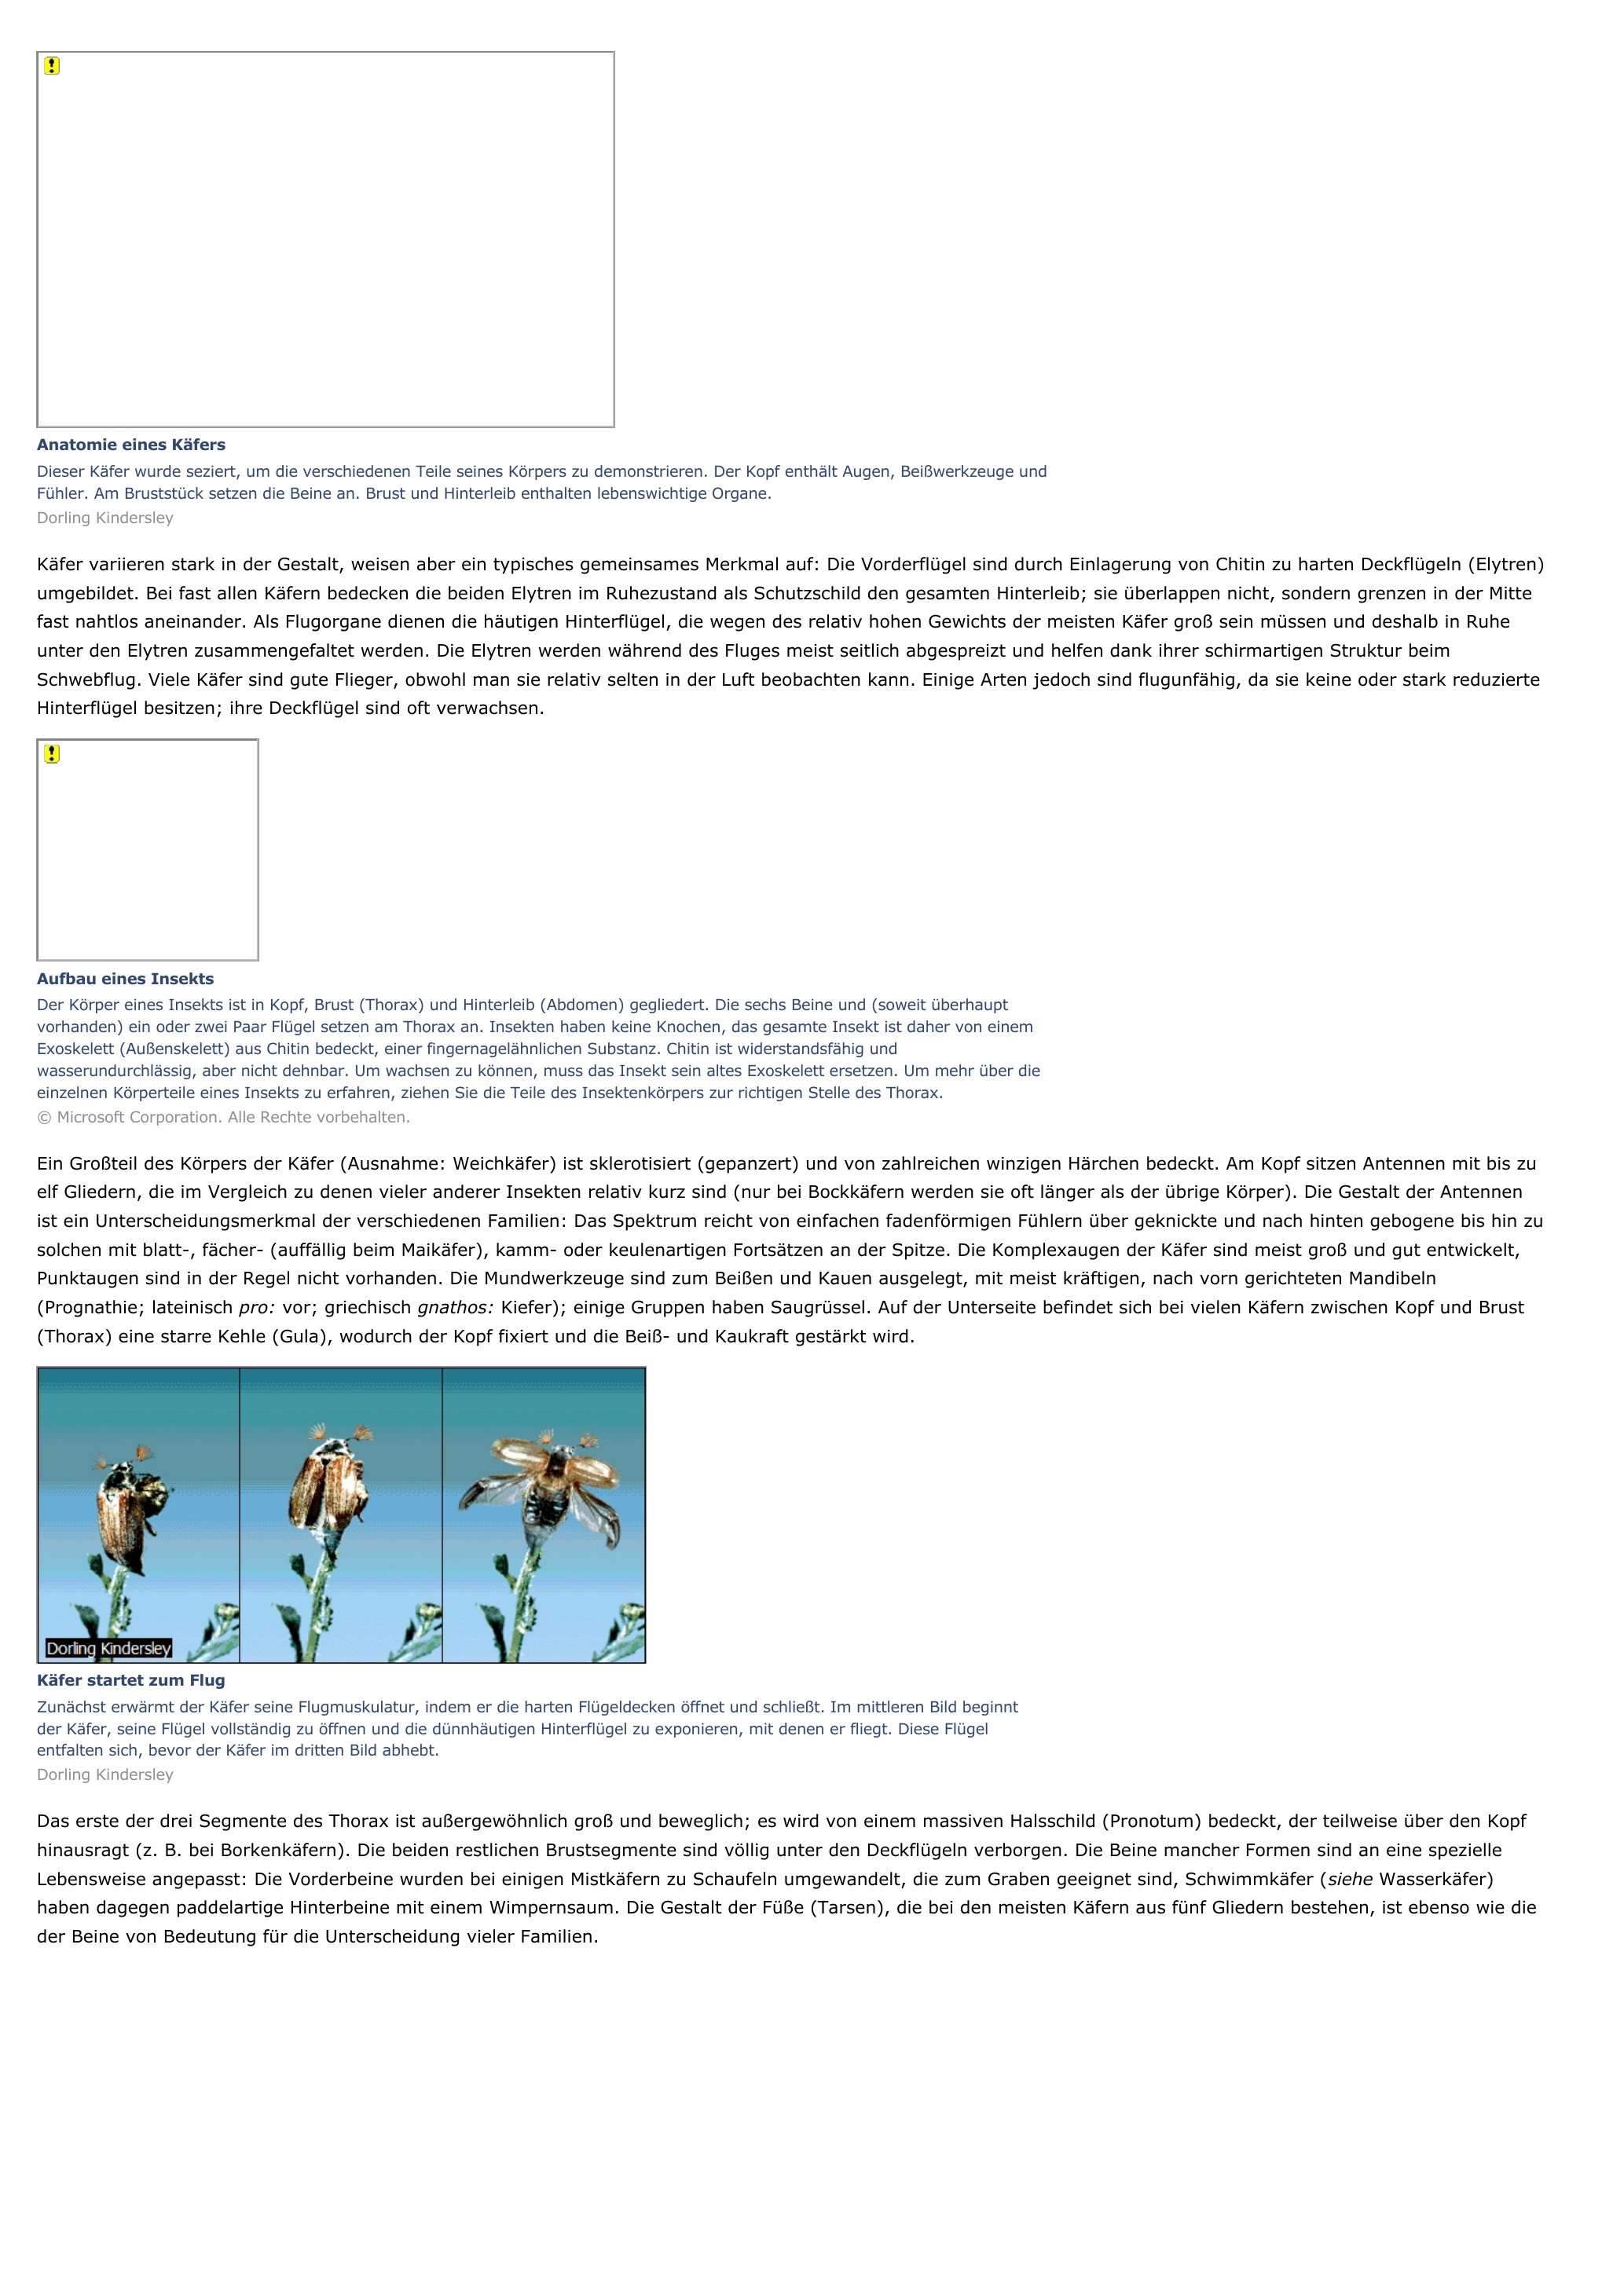 Prévisualisation du document Käfer - Tiere.